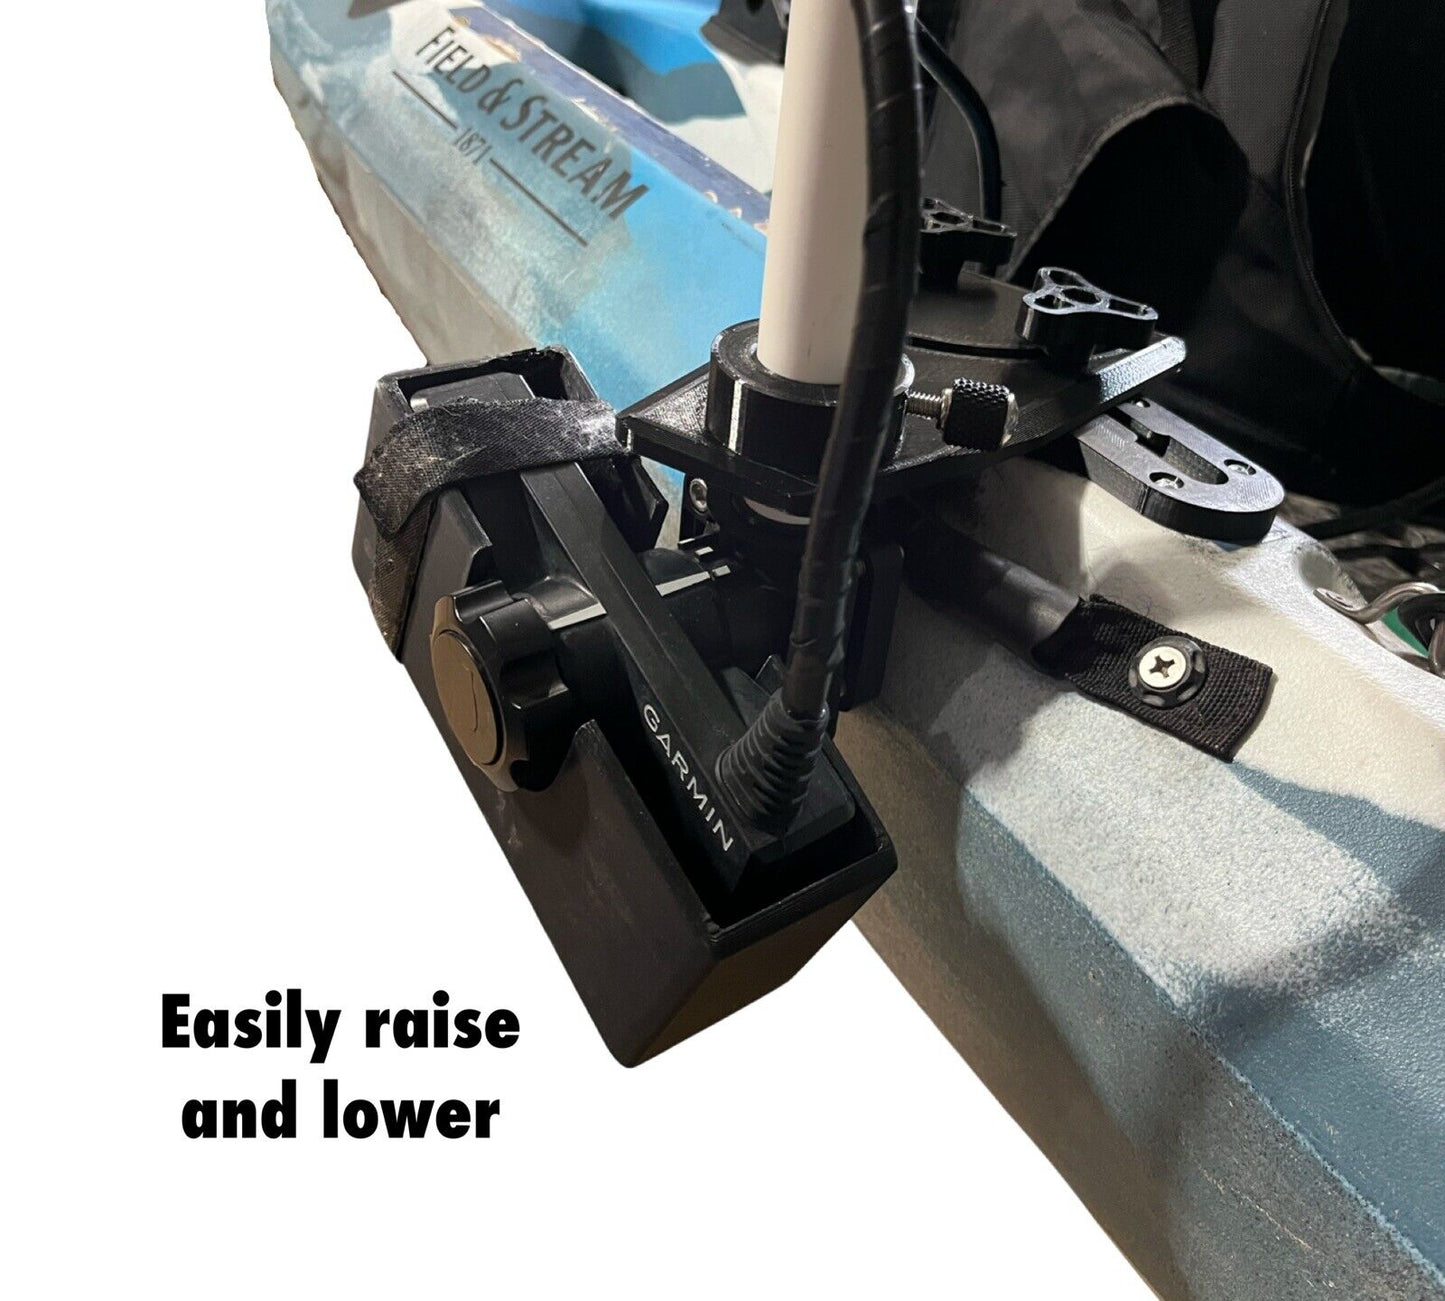 Folding Kayak Transducer Arm Mount - Livescope & 2D Sonar